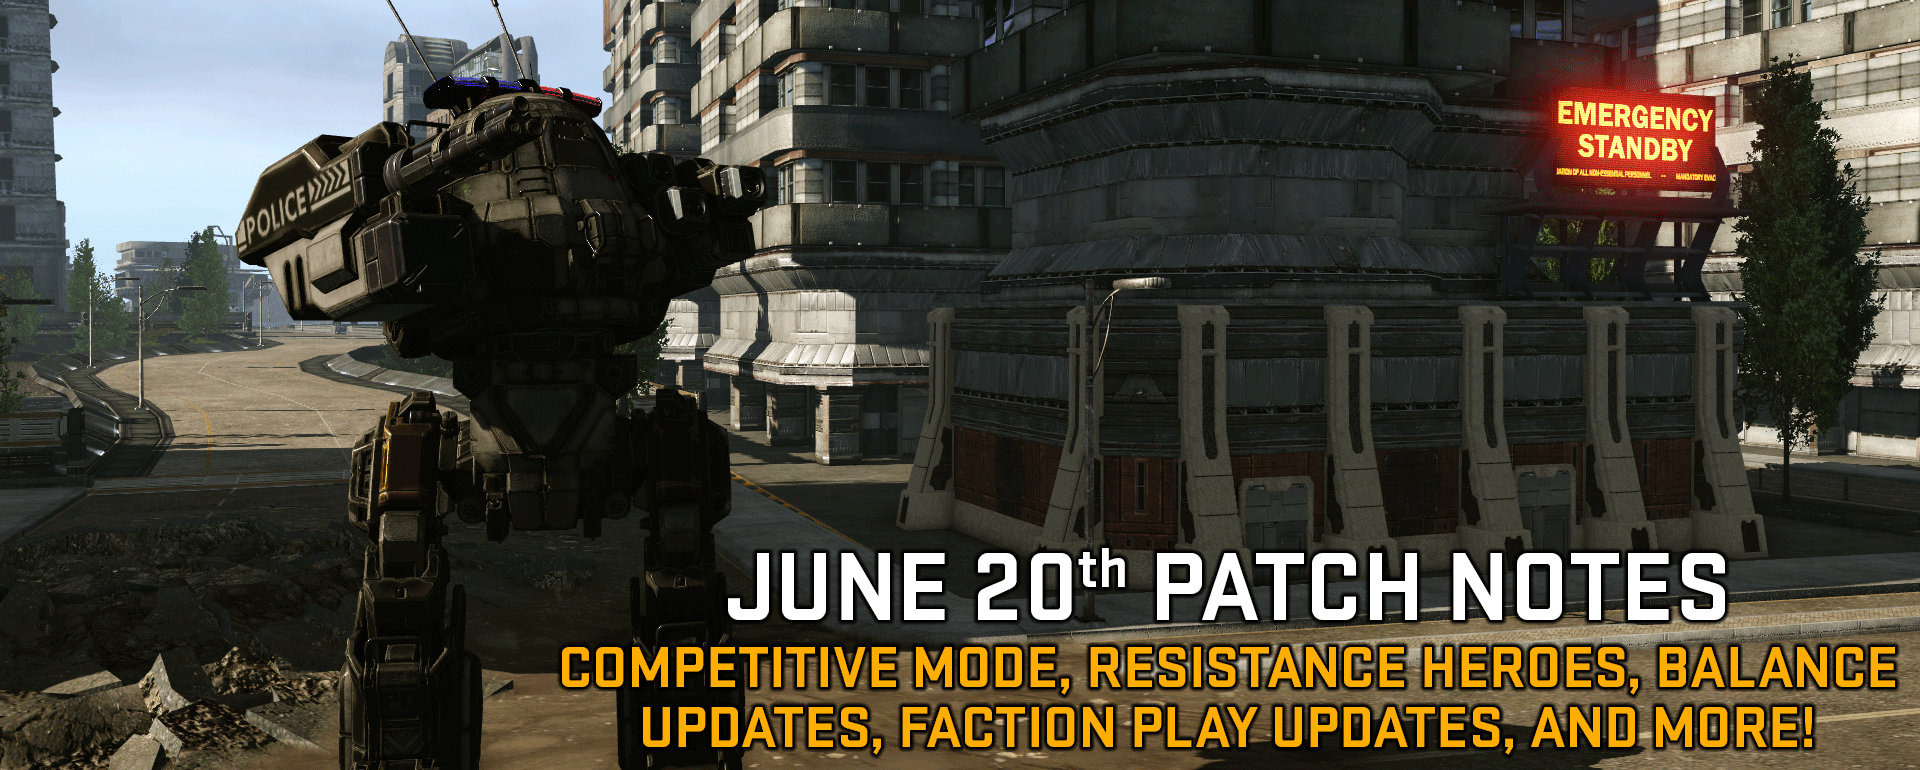 Battlefield 5 1.29 Update Patch Notes